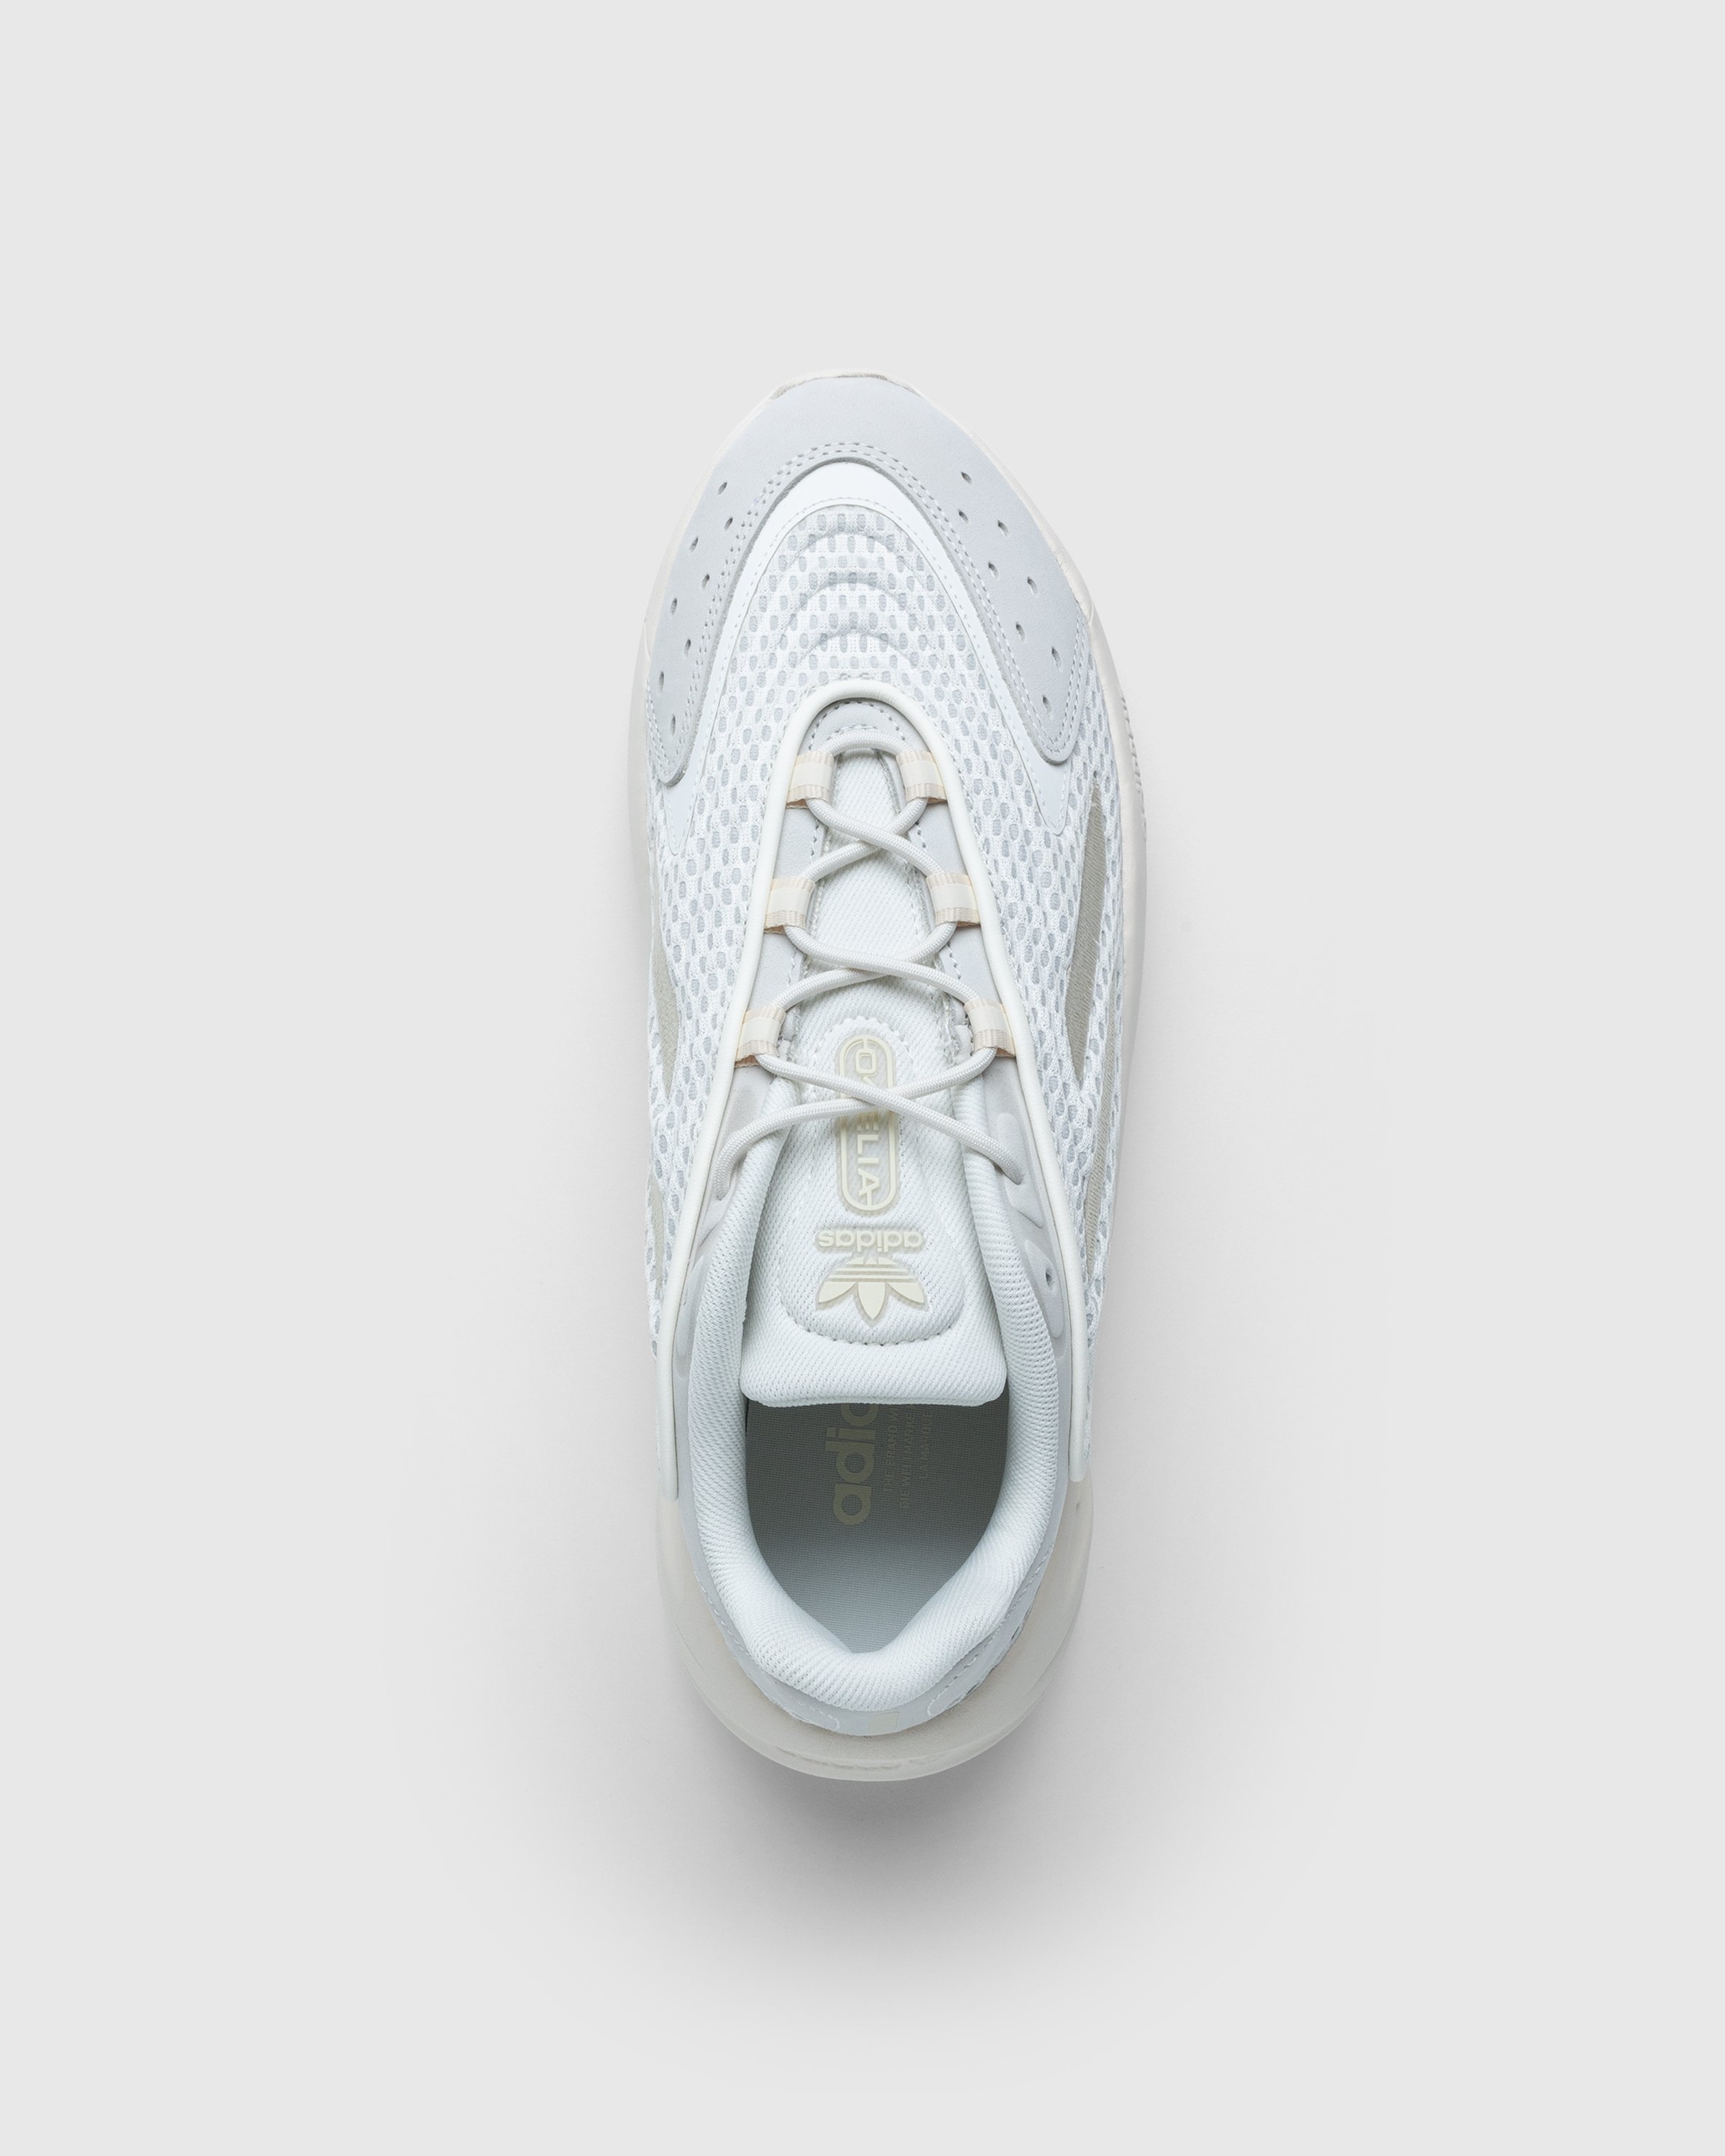 Adidas - Ozelia Off White/White - Footwear - Beige - Image 5